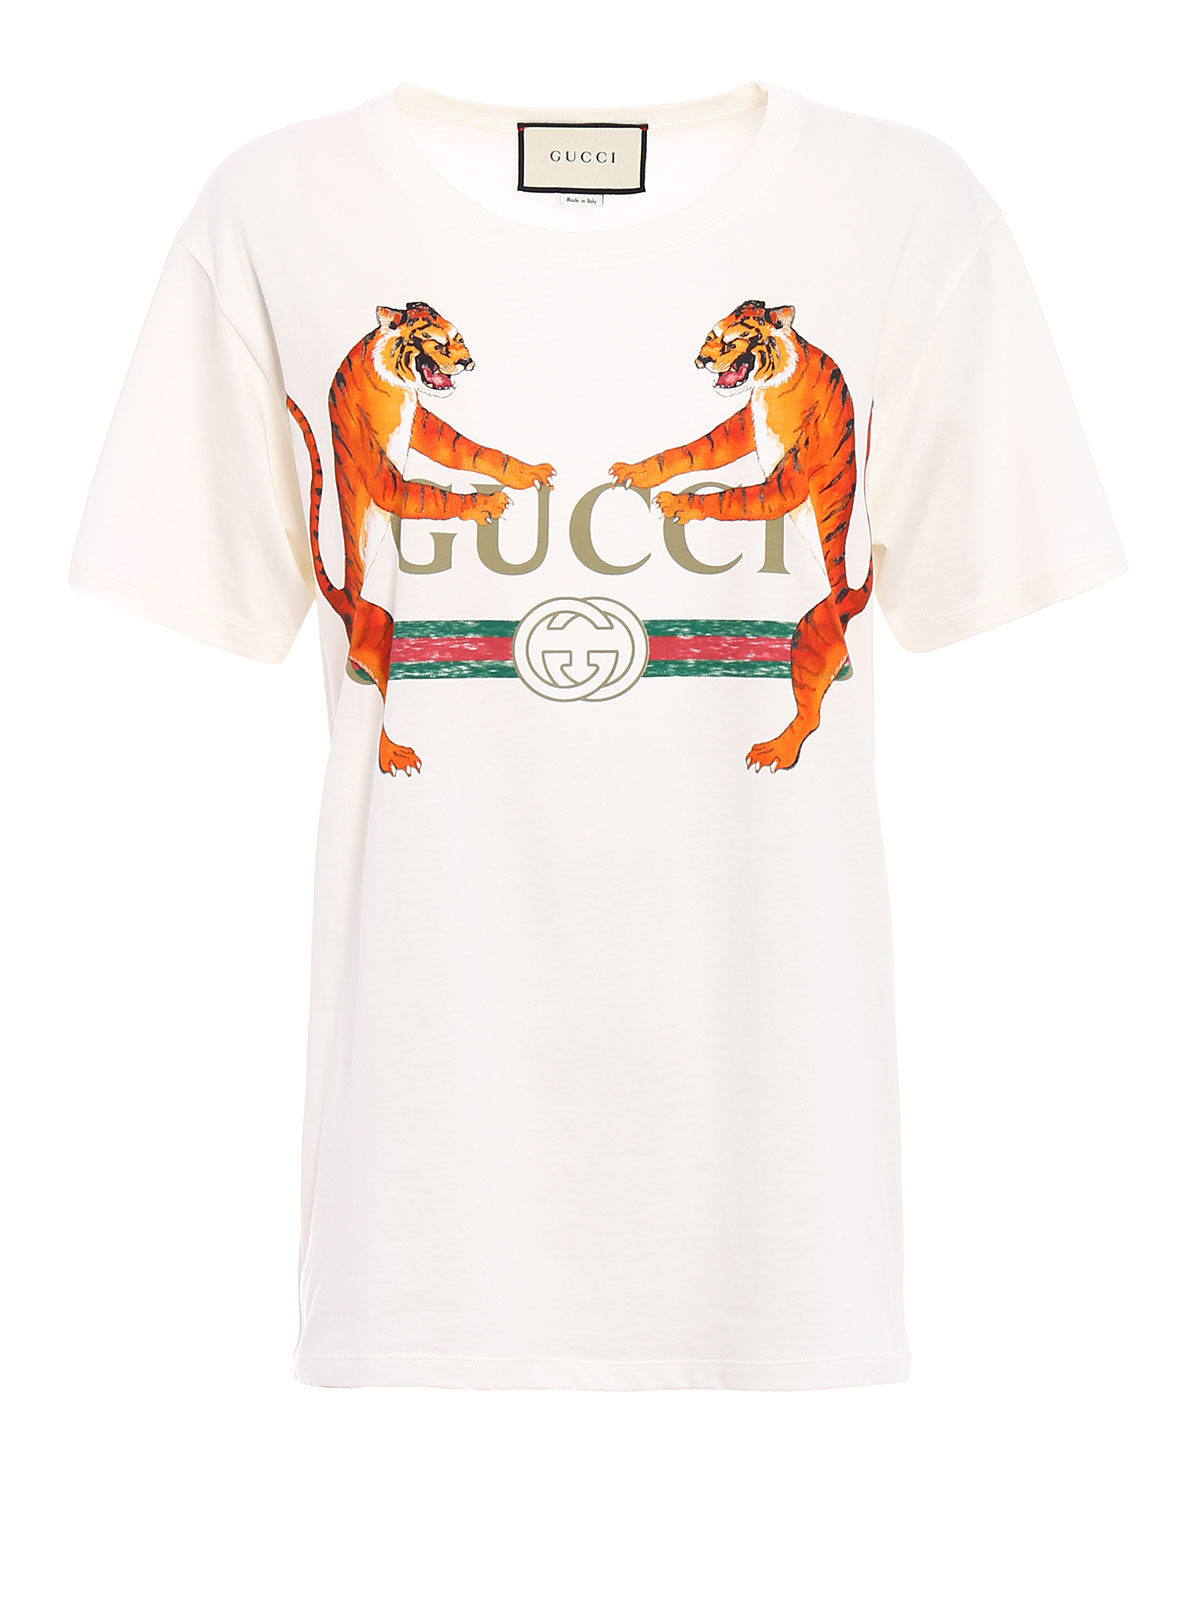 Gucci Tiger Print Shirt